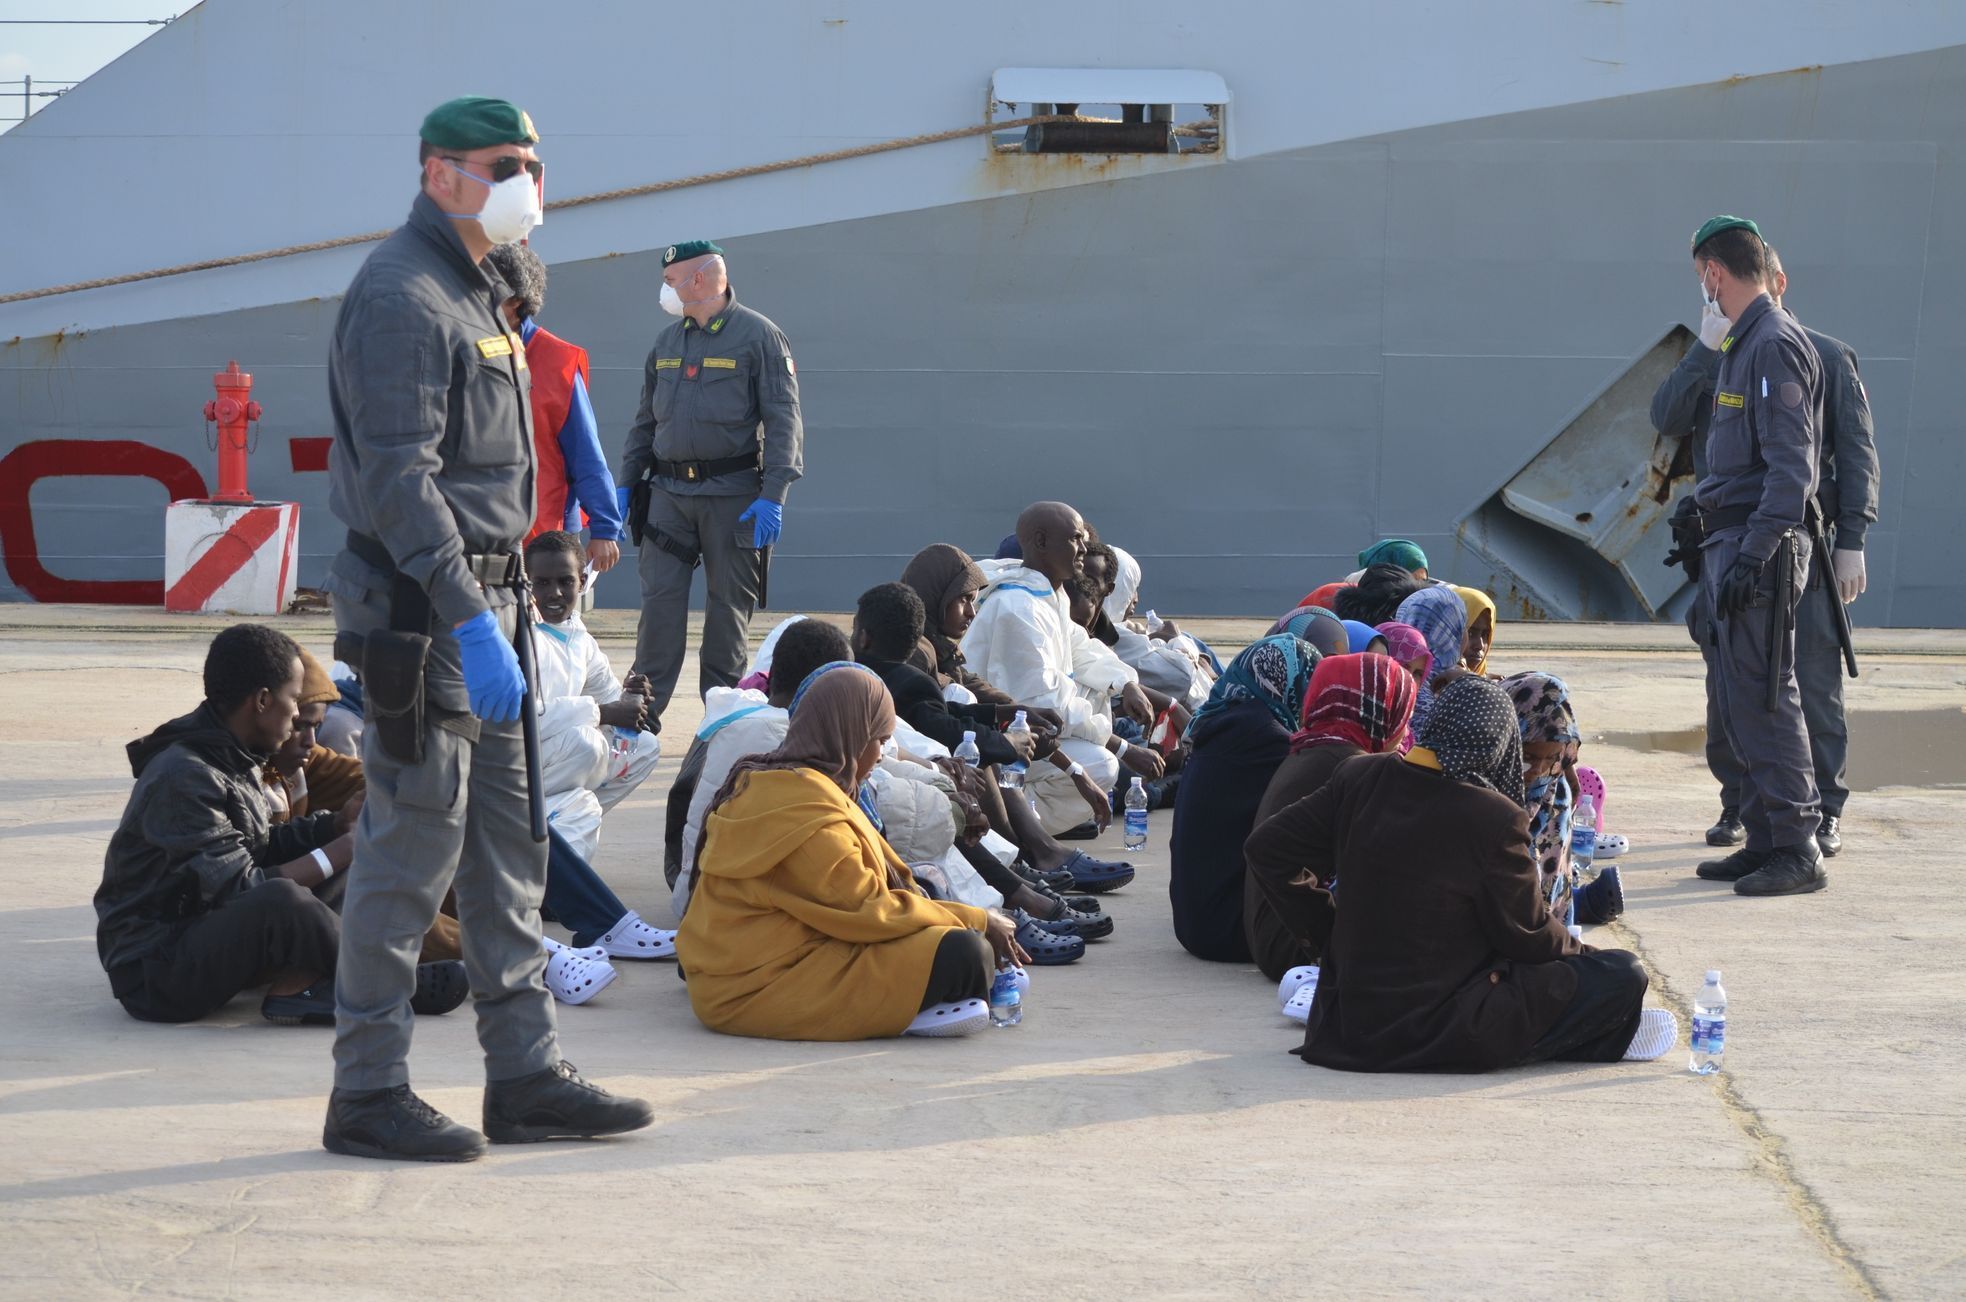 Fotky z mise Mattea de Bellise na Lampeduse v dubnu 2015